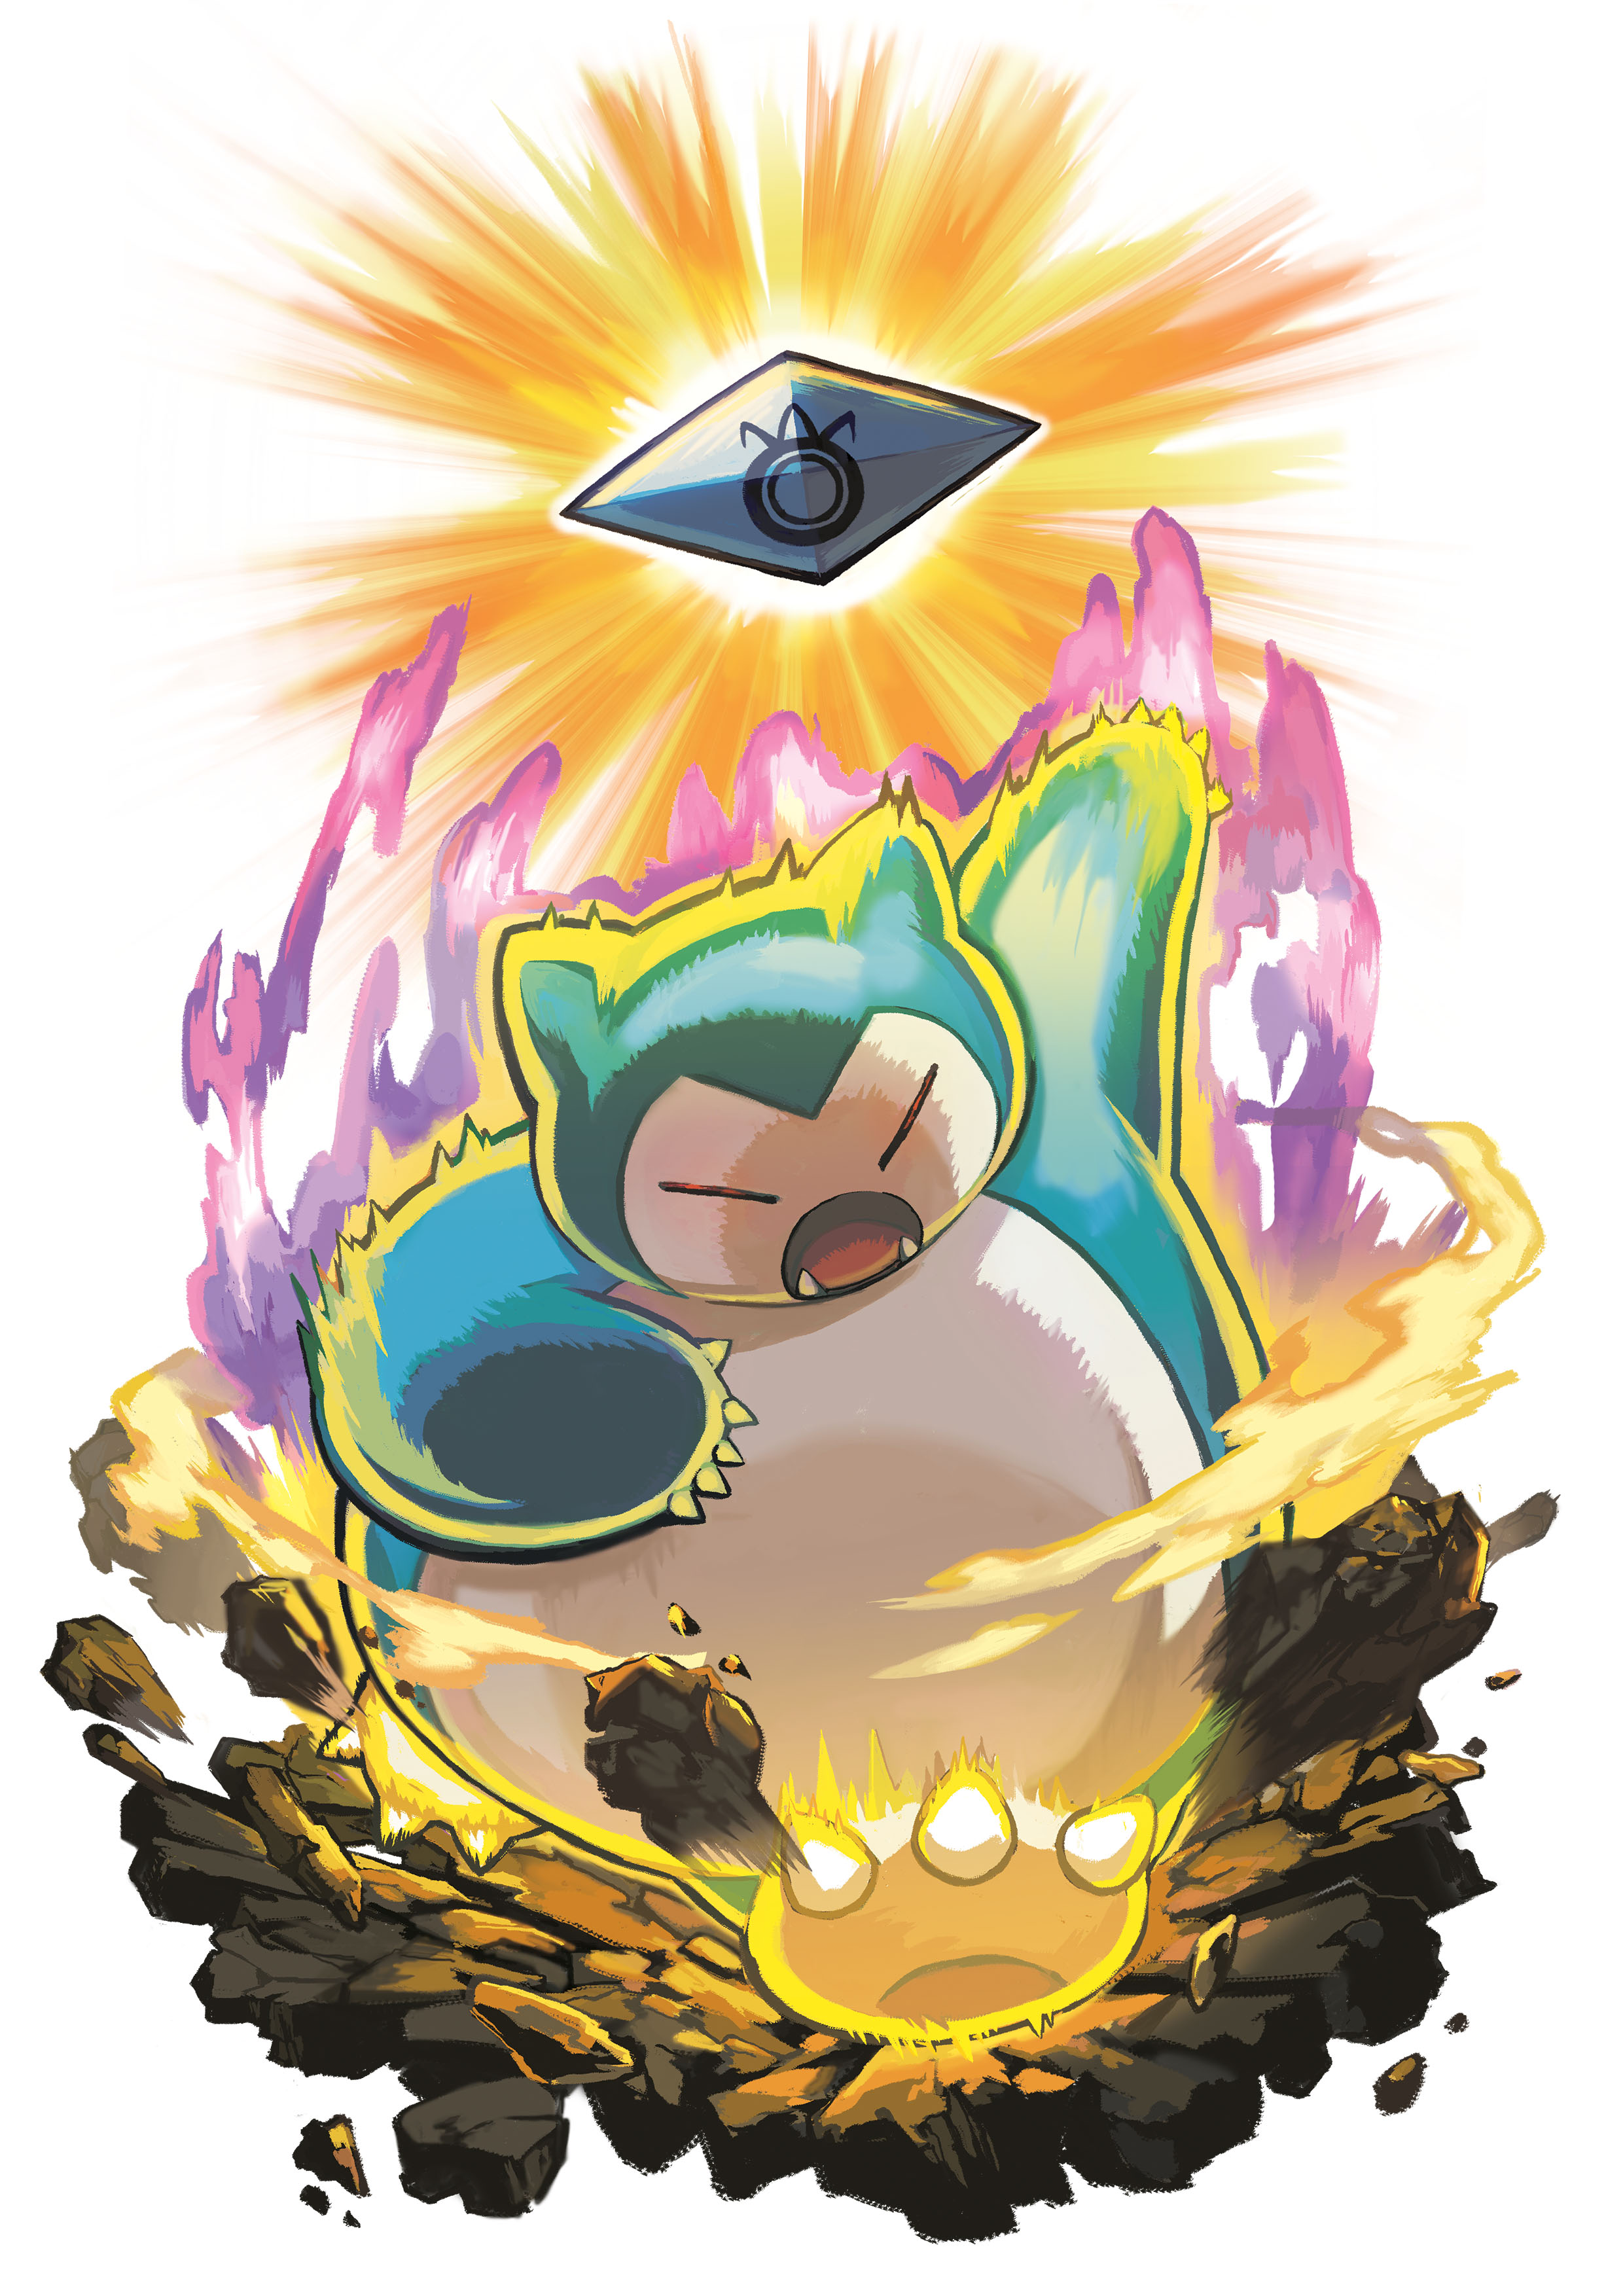 Rattata Gets An Alola Form In Pokémon Sun & Moon - Siliconera